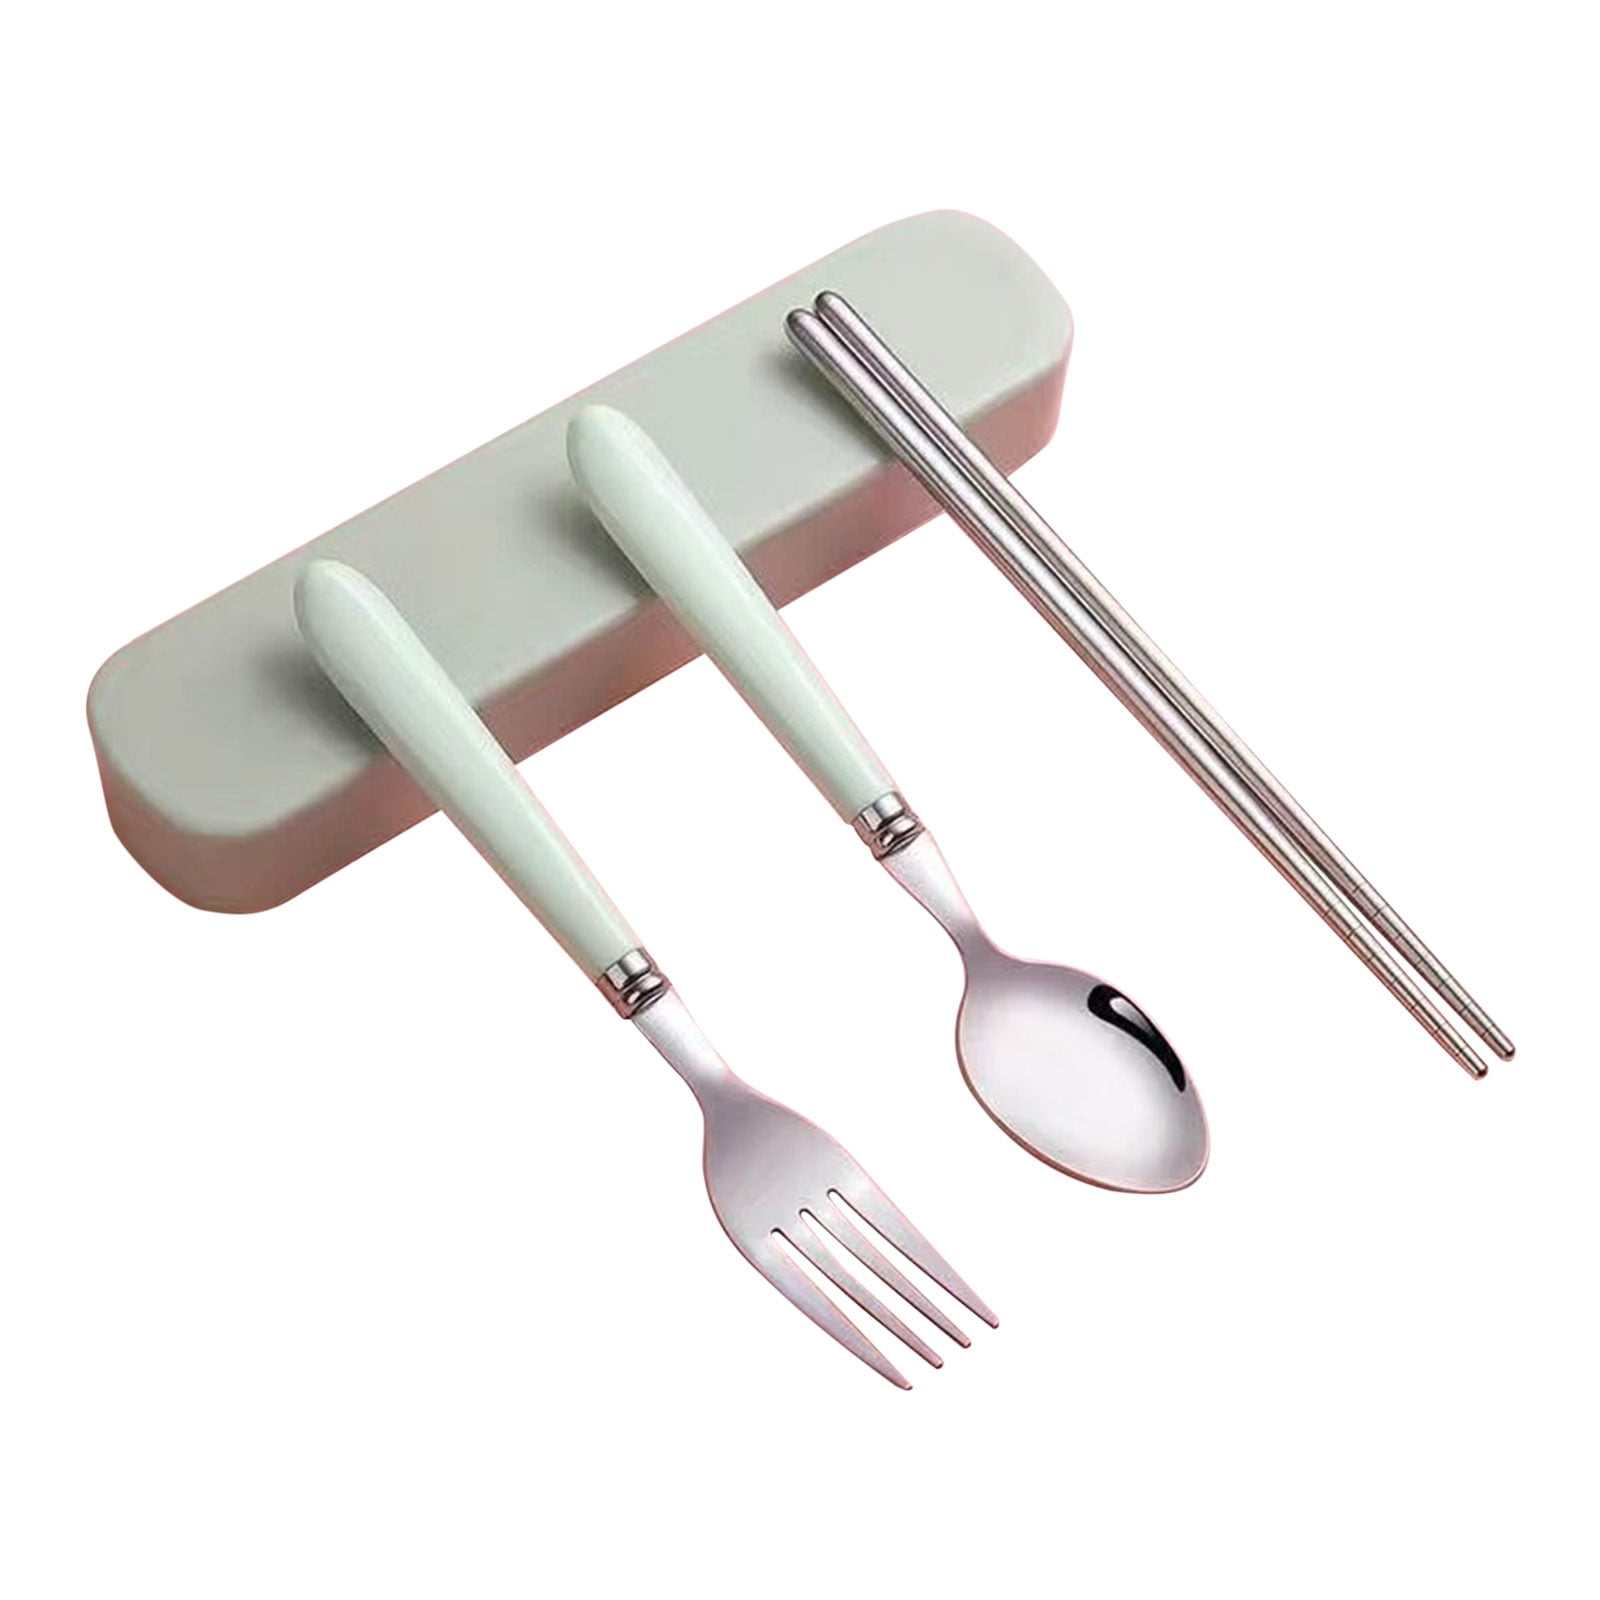 10Pcs Kids Fork and Spoon Set 410 Stainless Steel Kids Silverware